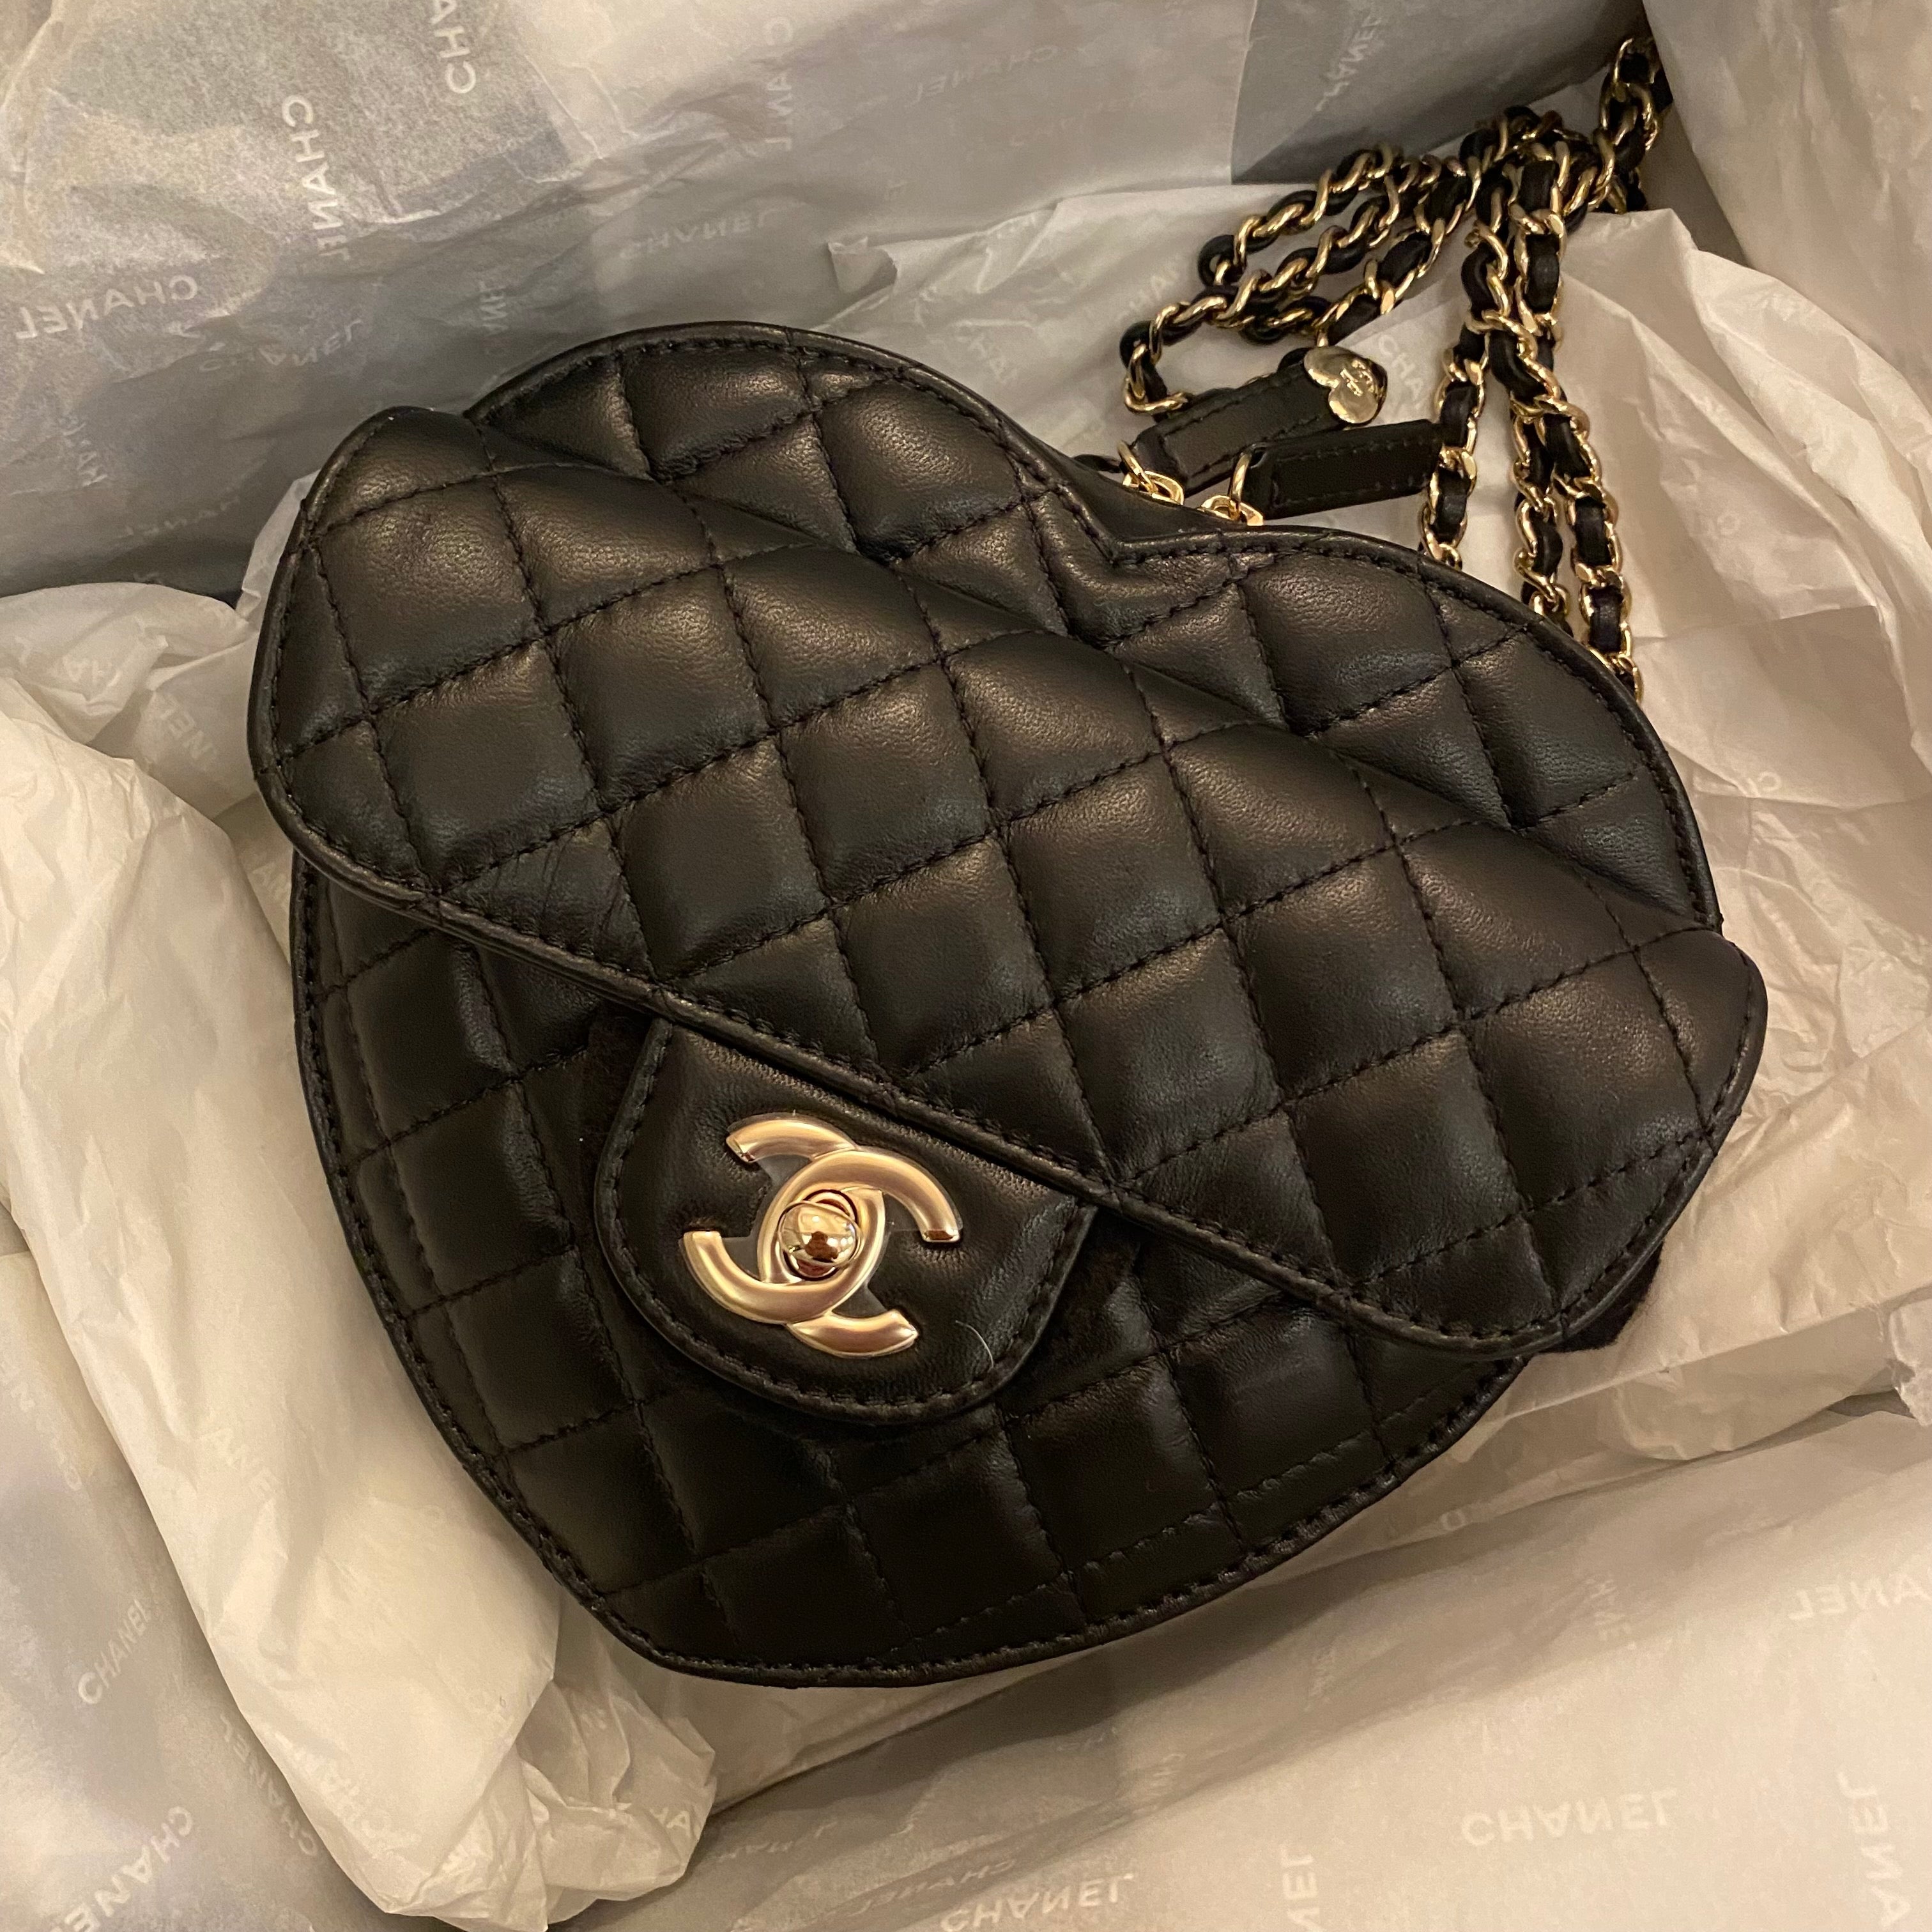 Chanel 22S Heart bag large black lambskin gold hw